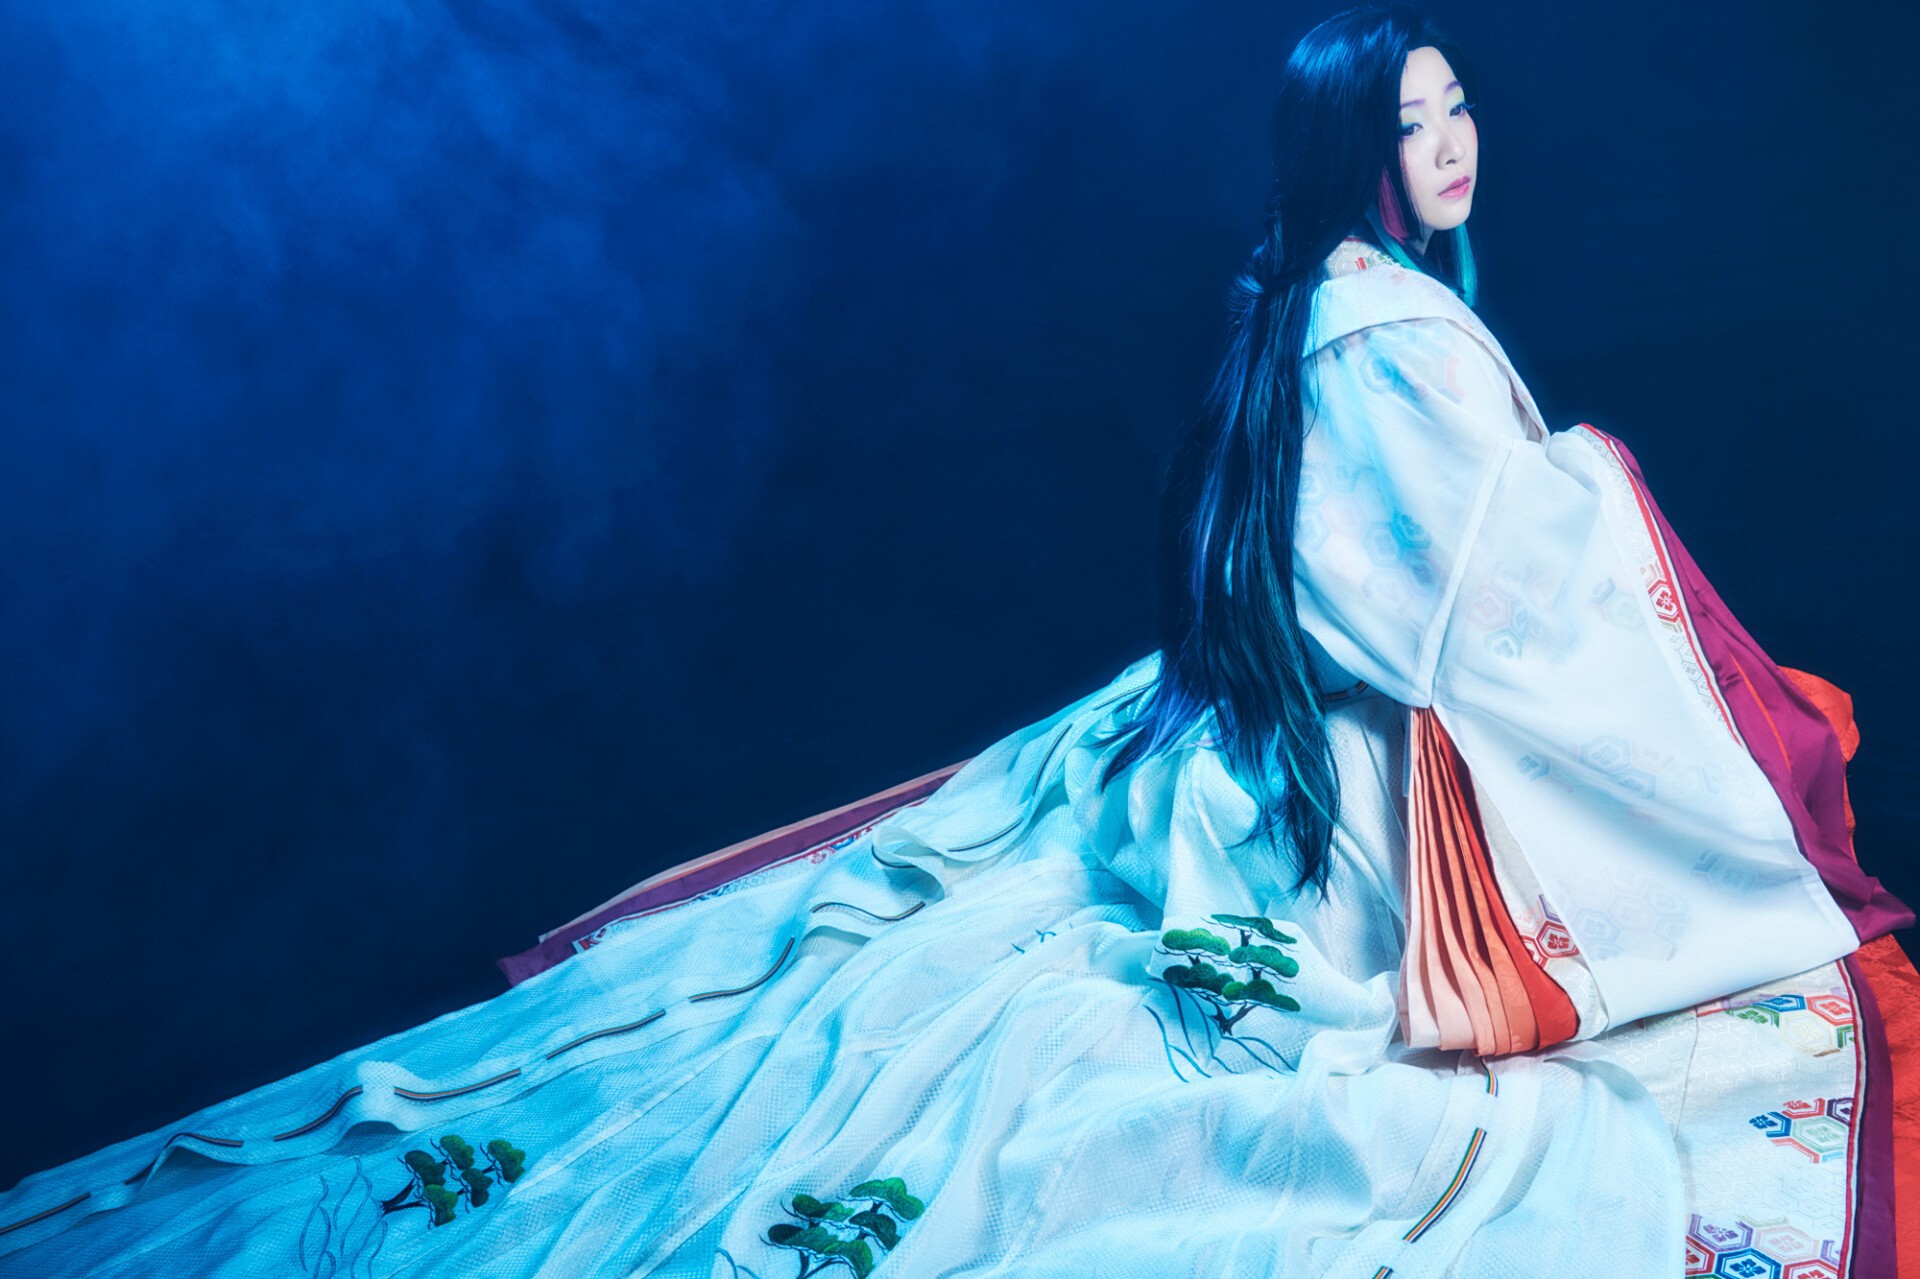 Iflyer 日本の美 を世界に発信するフェス Fantasia かぐや姫役のmay Nへインタビュー